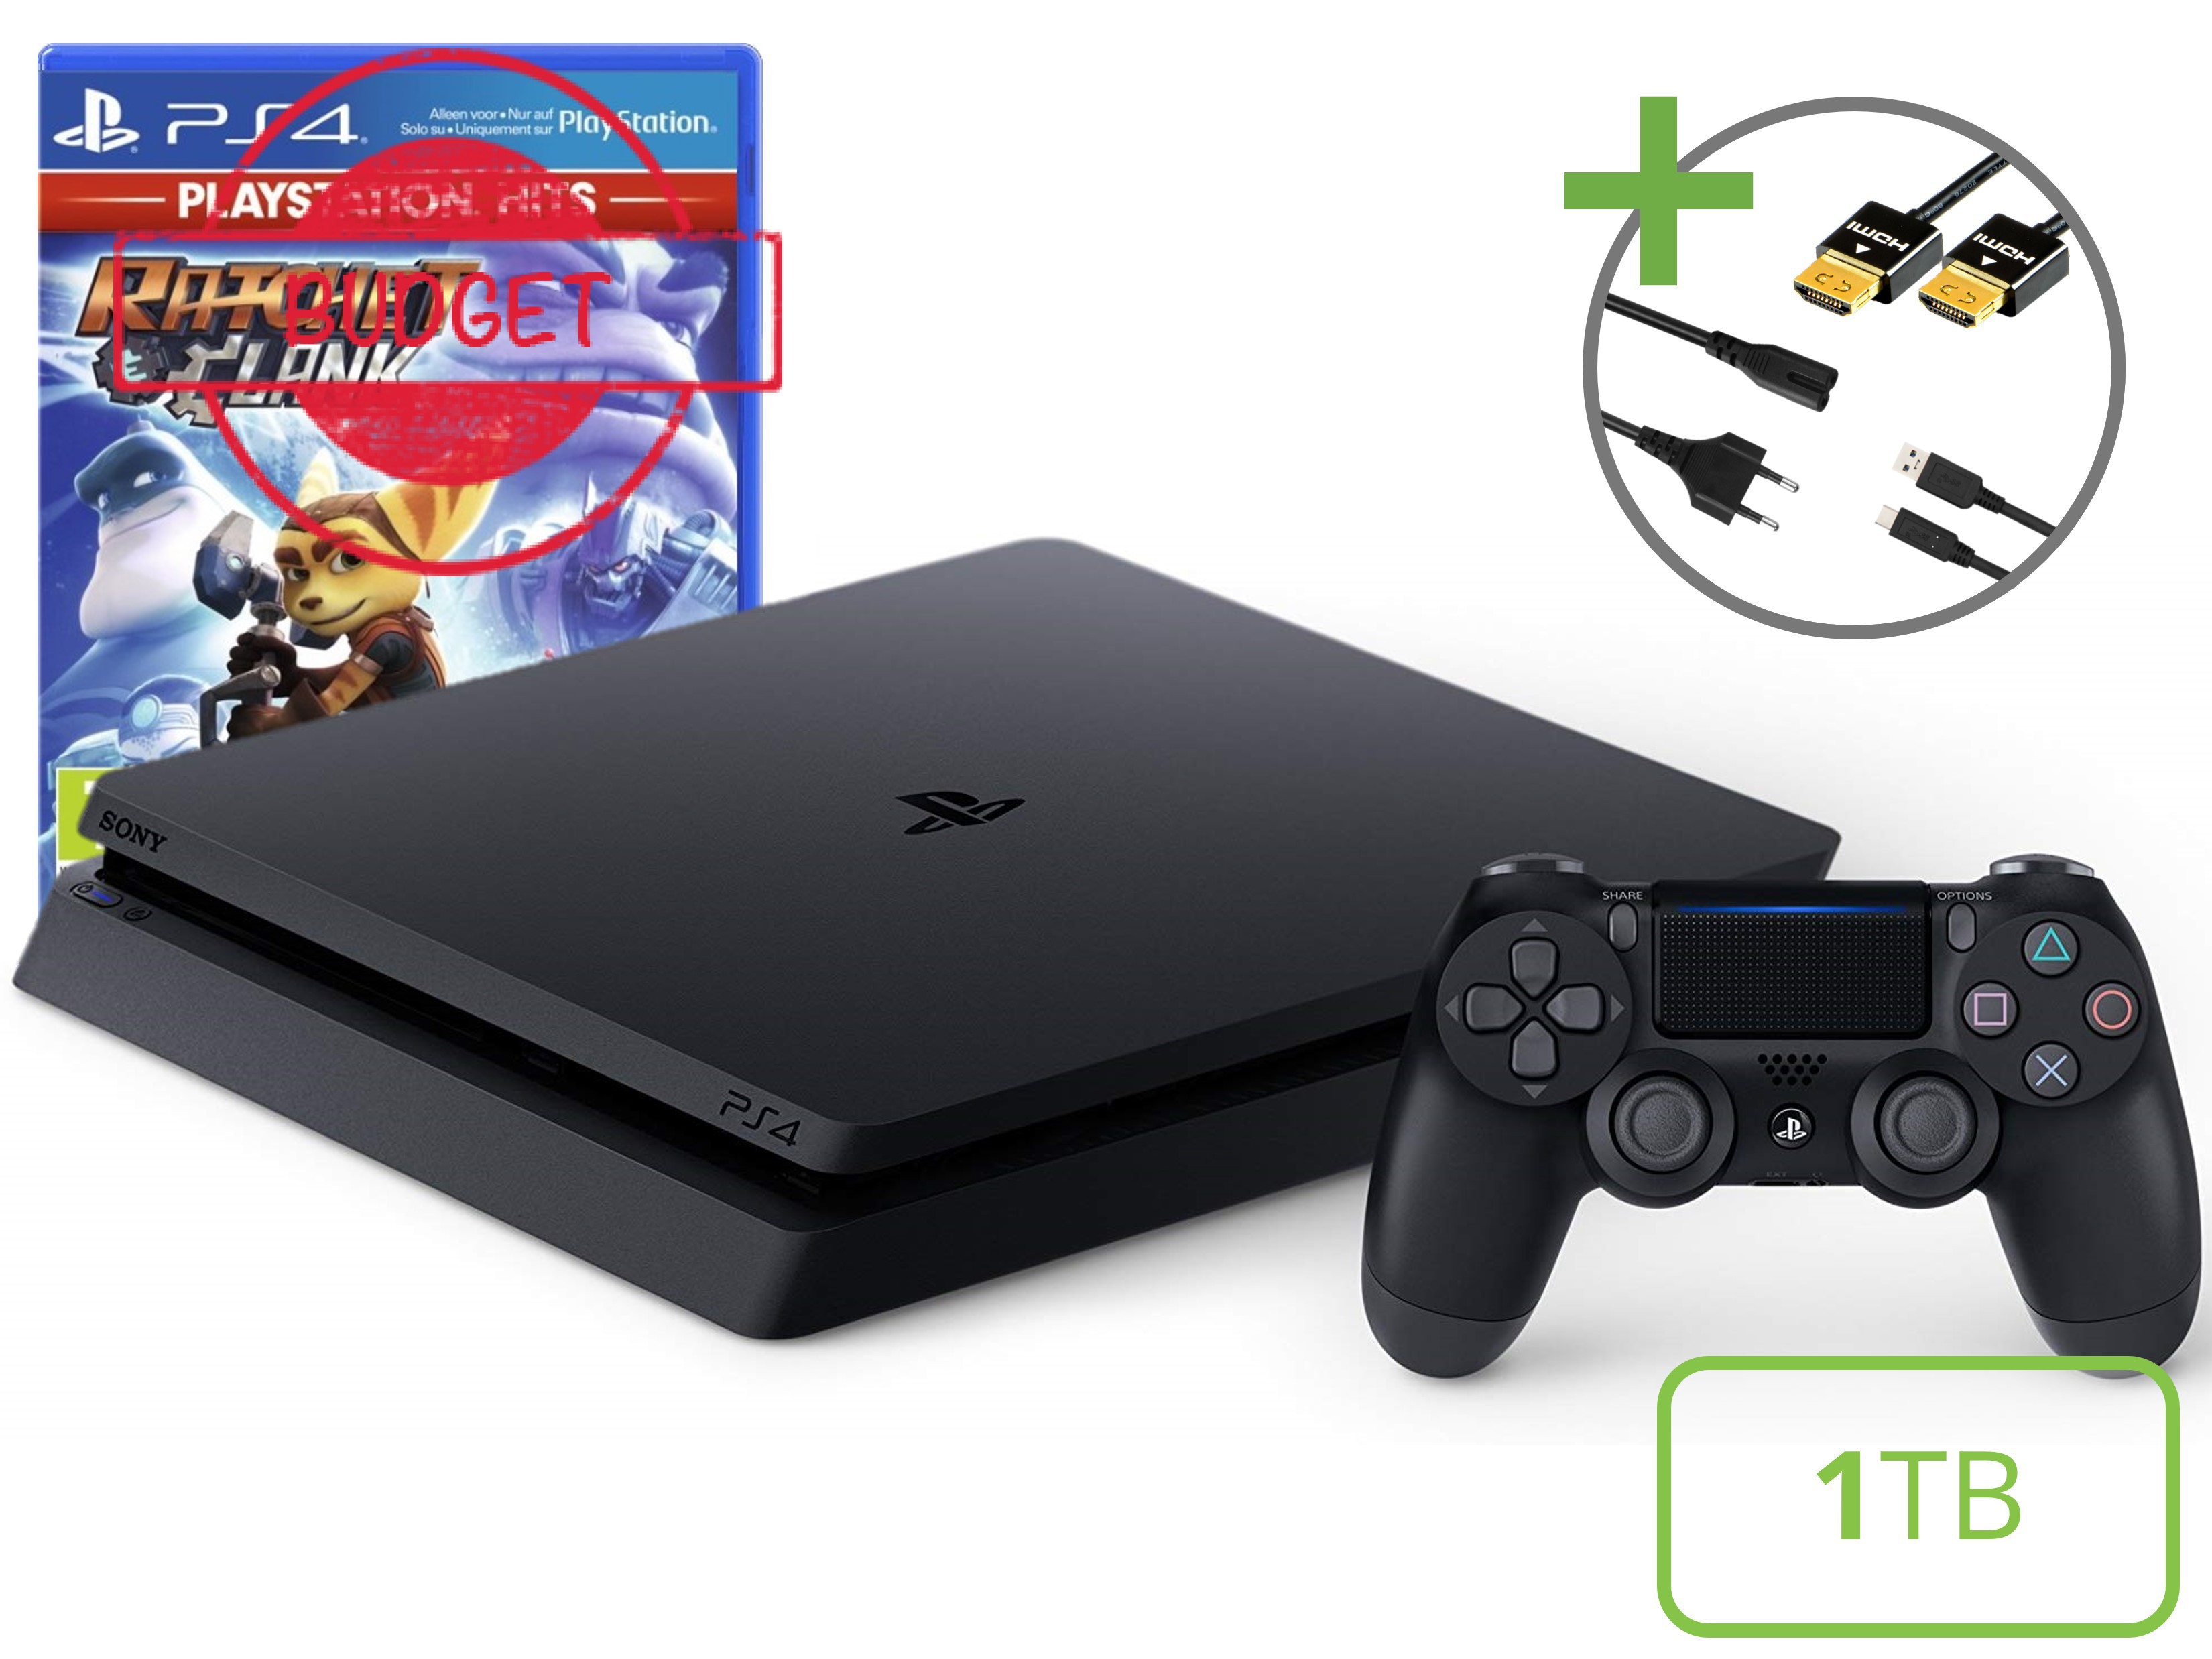 Sony PlayStation 4 Slim Starter Pack - 1TB Ratchet & Clank Edition - Budget - Playstation 4 Hardware